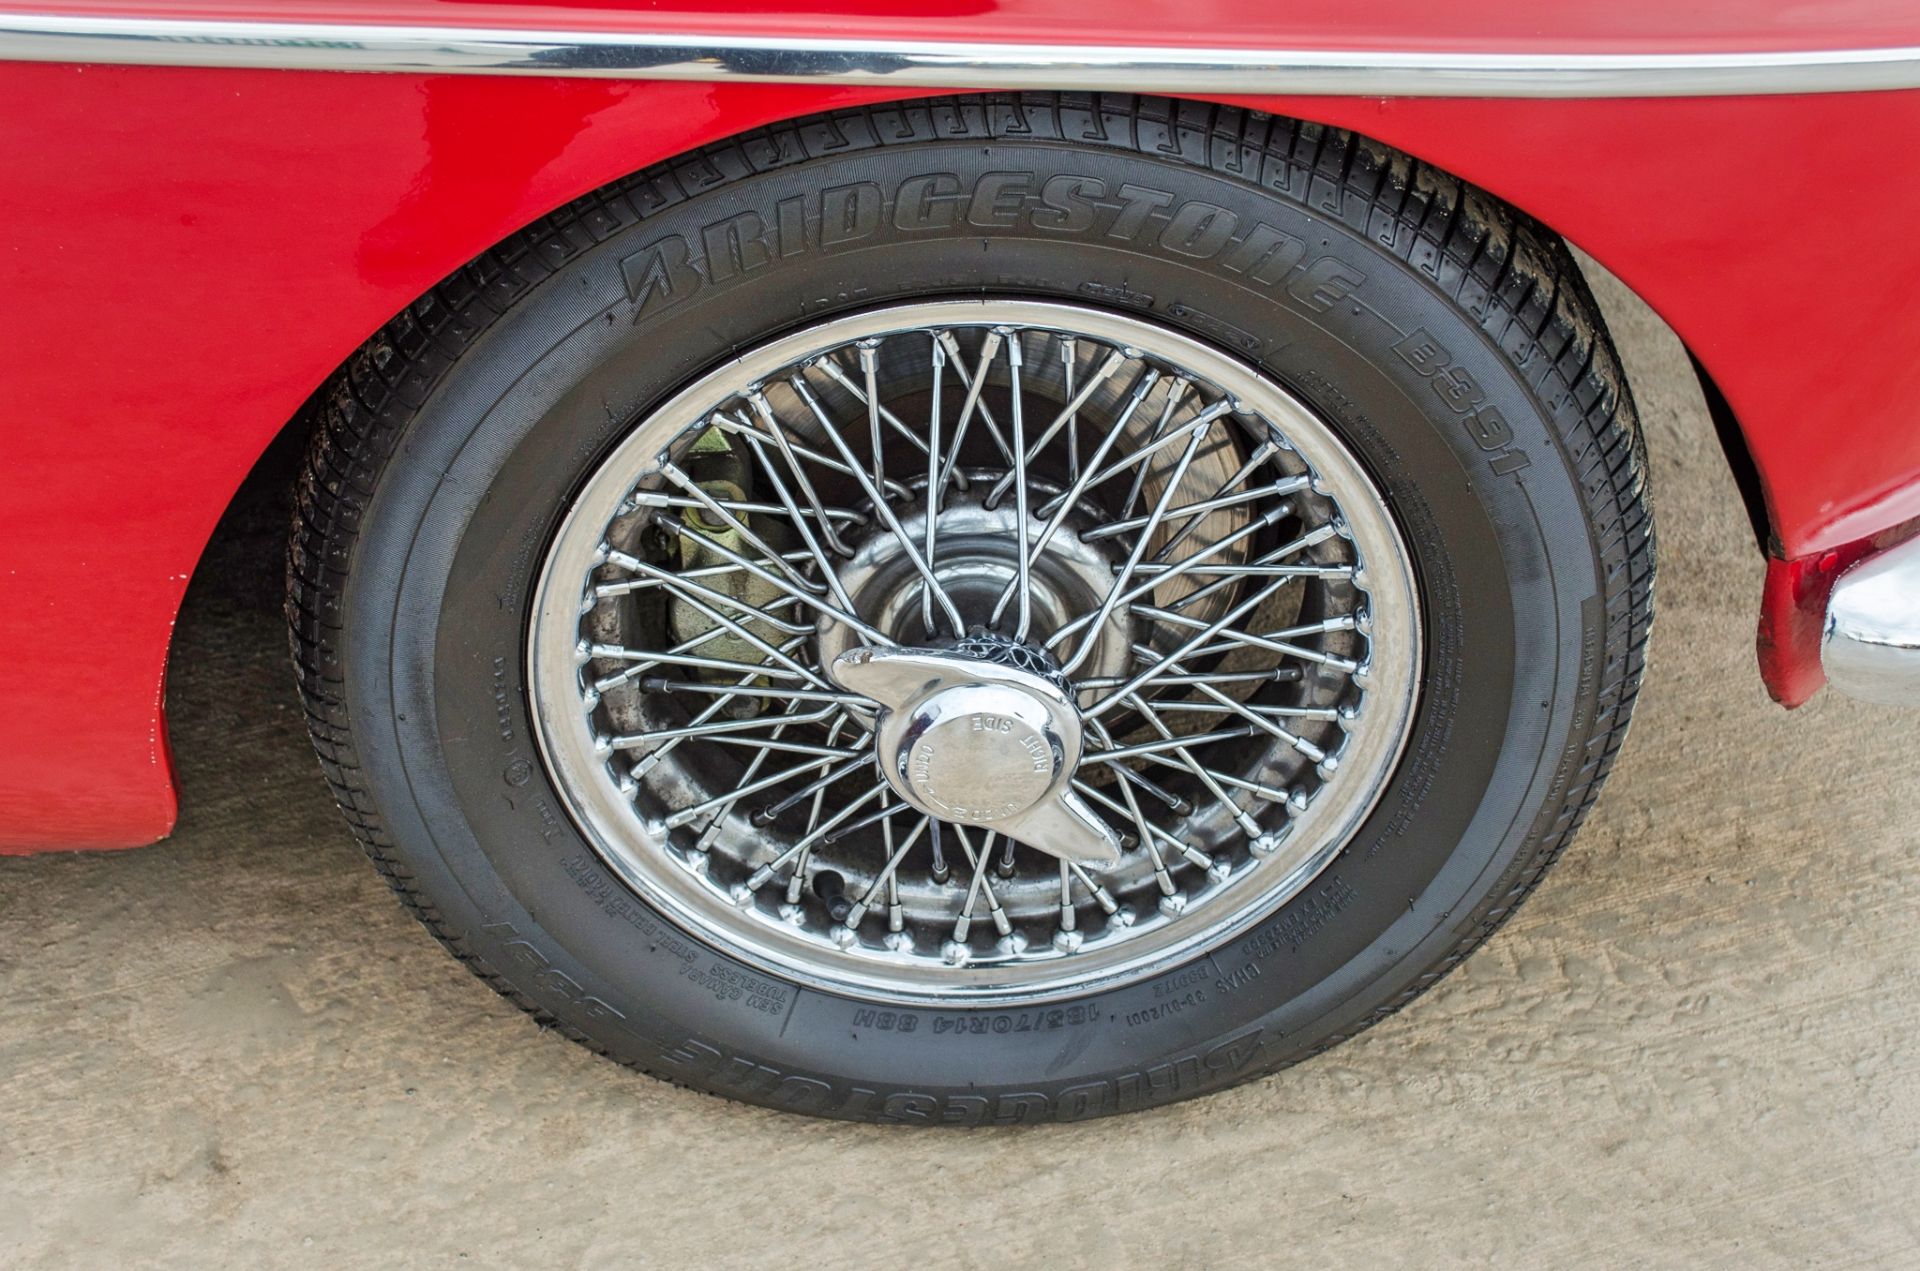 1972 MG B Roadster 1798 cc convertible - Image 25 of 54